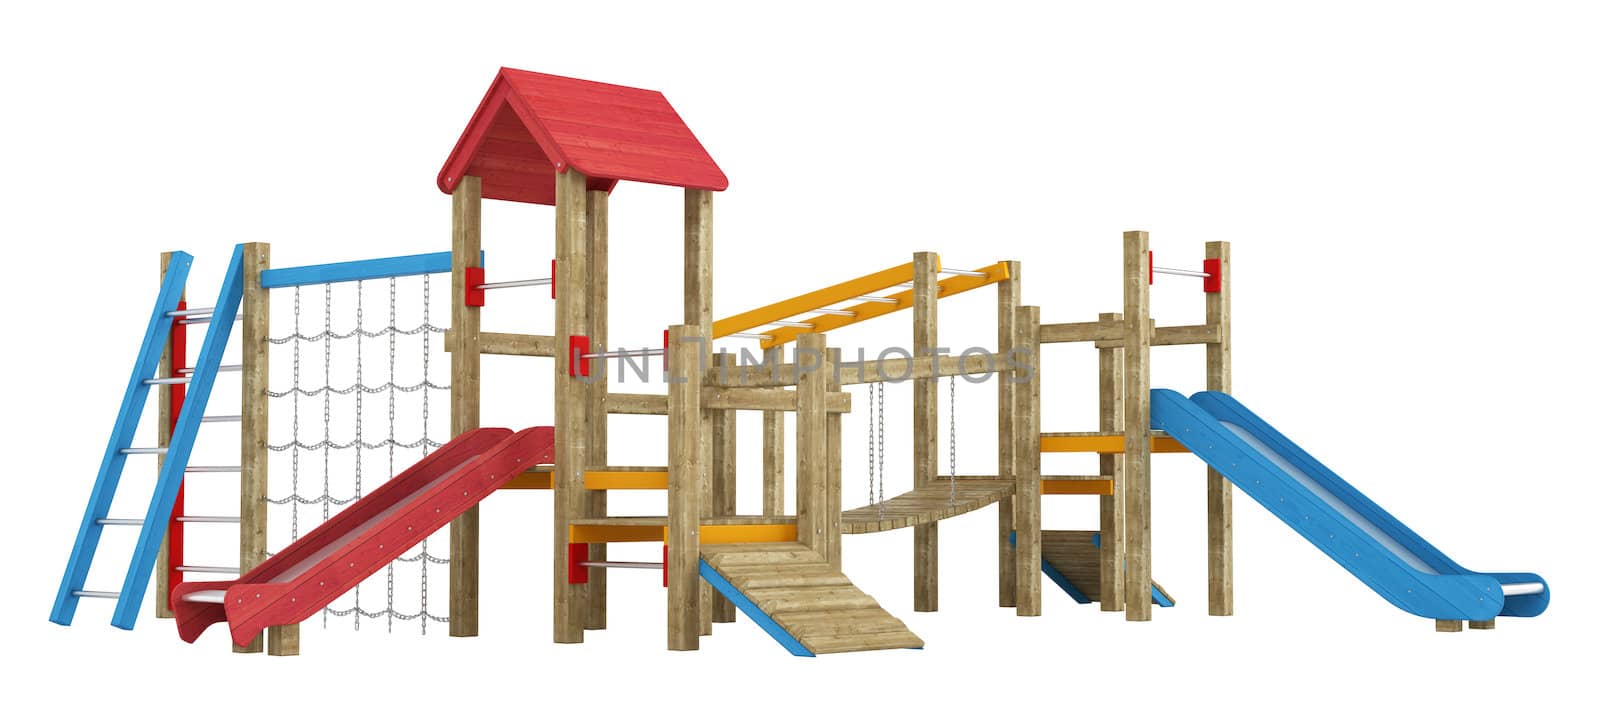 Playground apparatus with slides by AlexanderMorozov